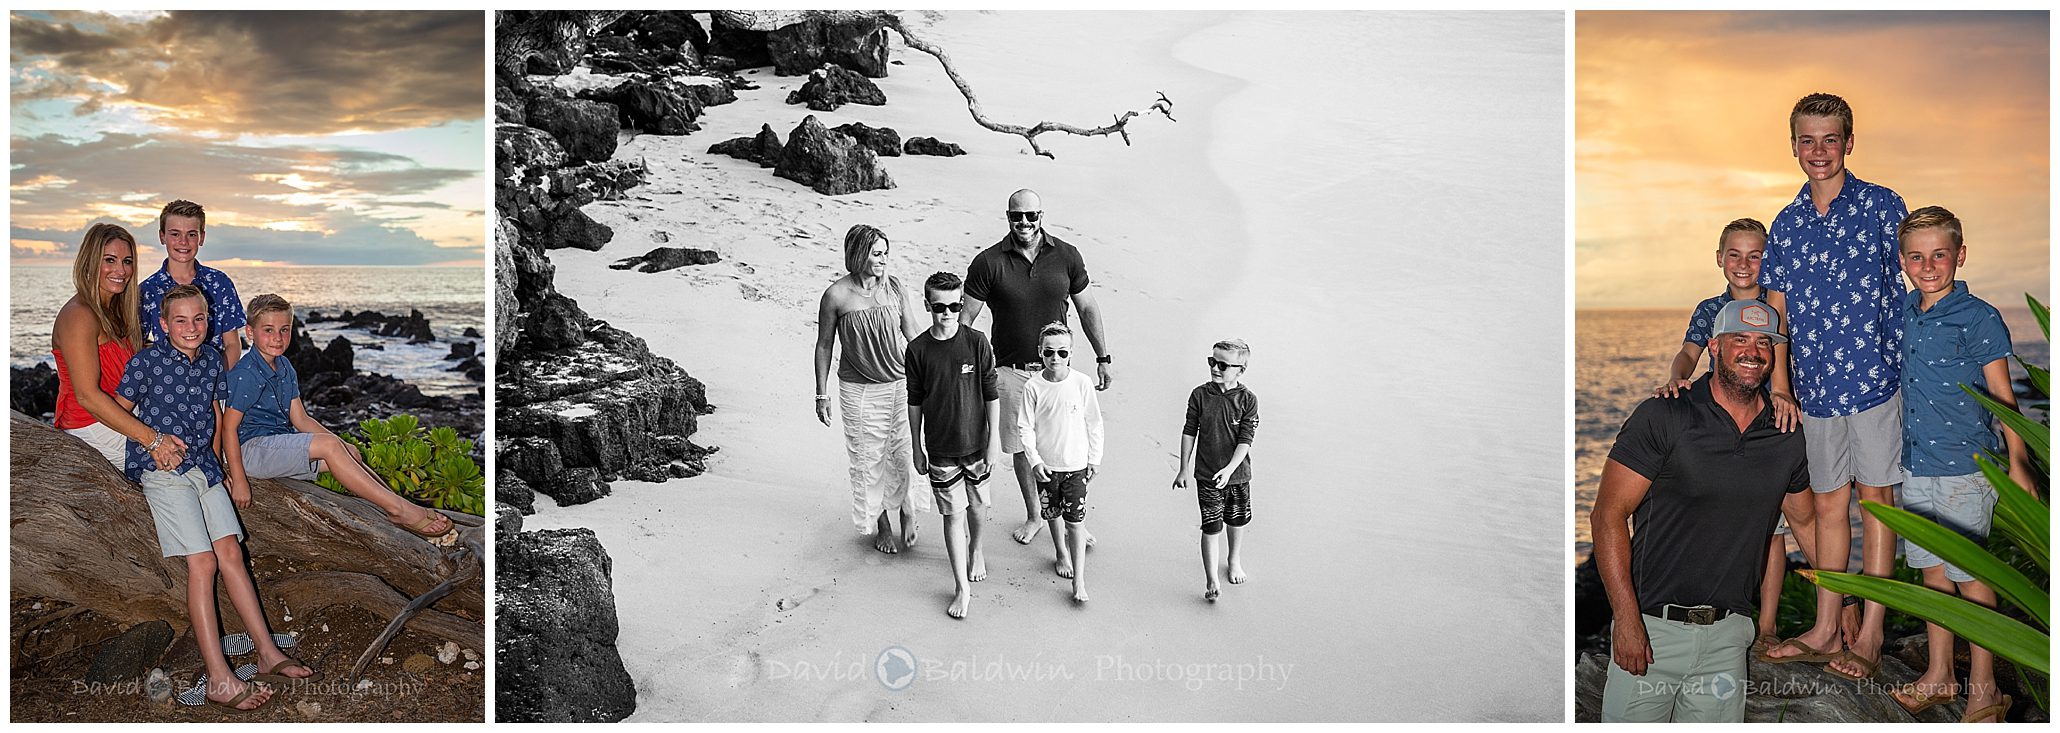 mauna kea beach hotel family photos,